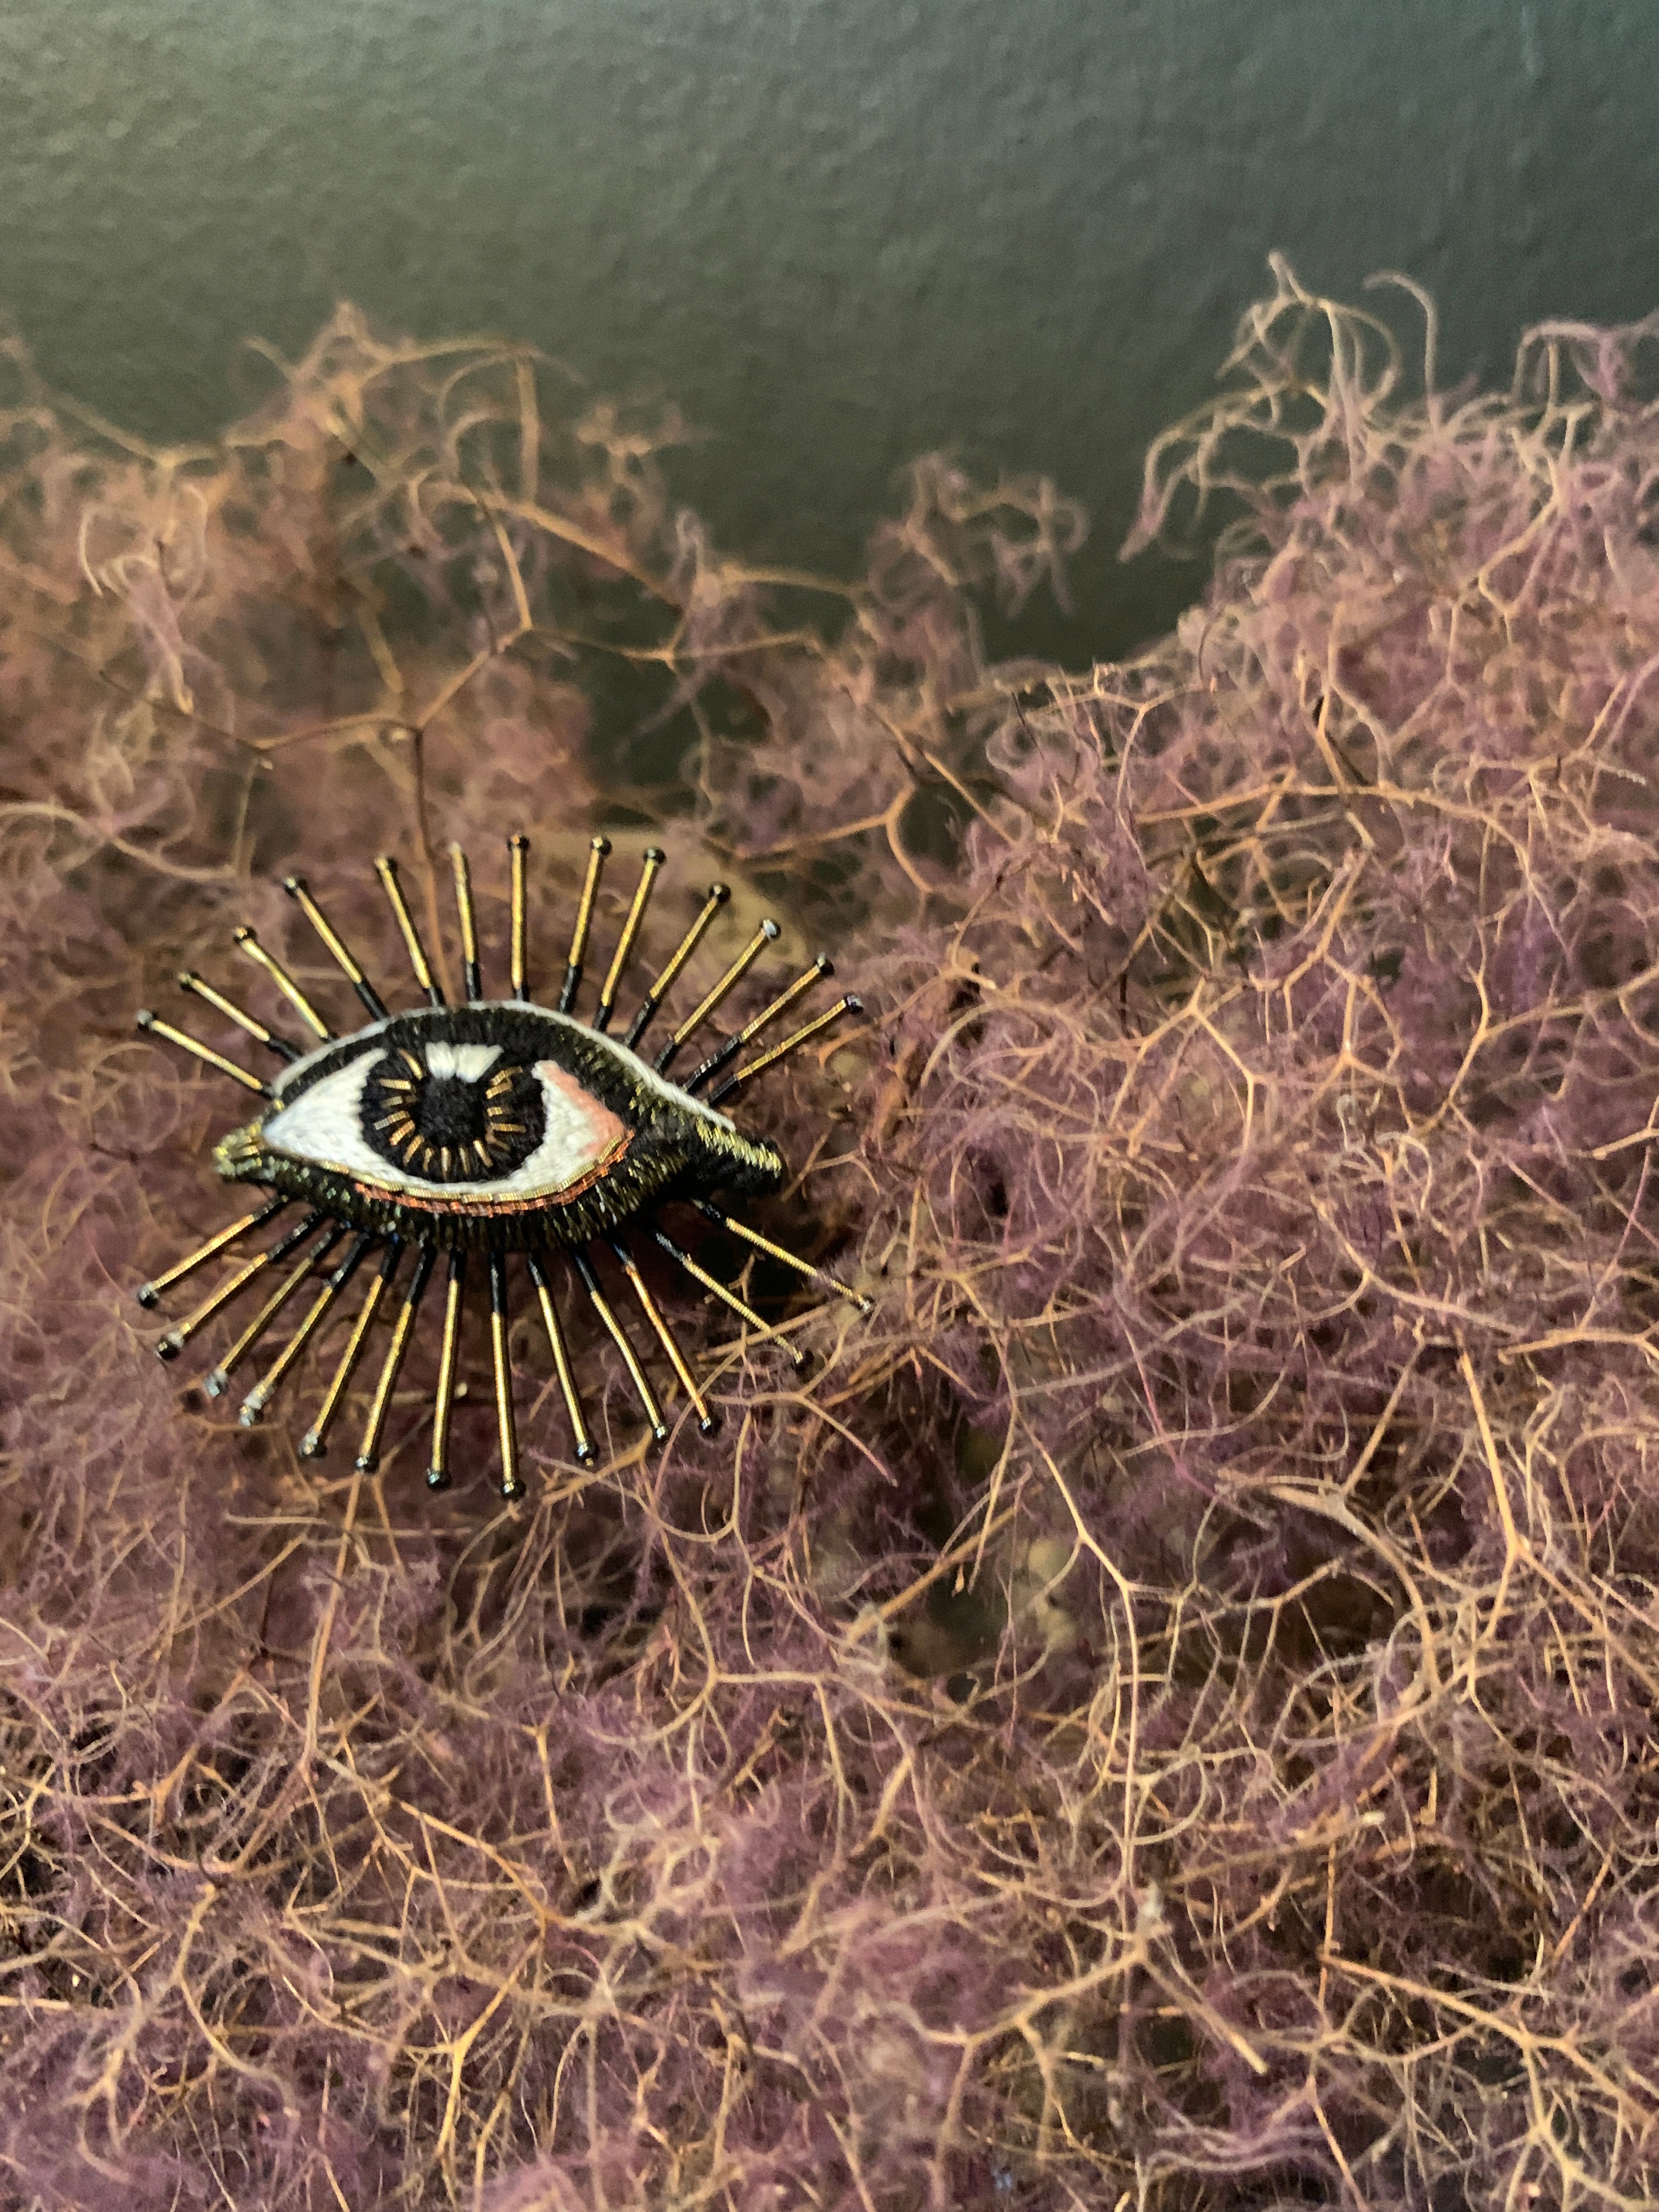 Handmade Brooch Pin - Mystic Eye